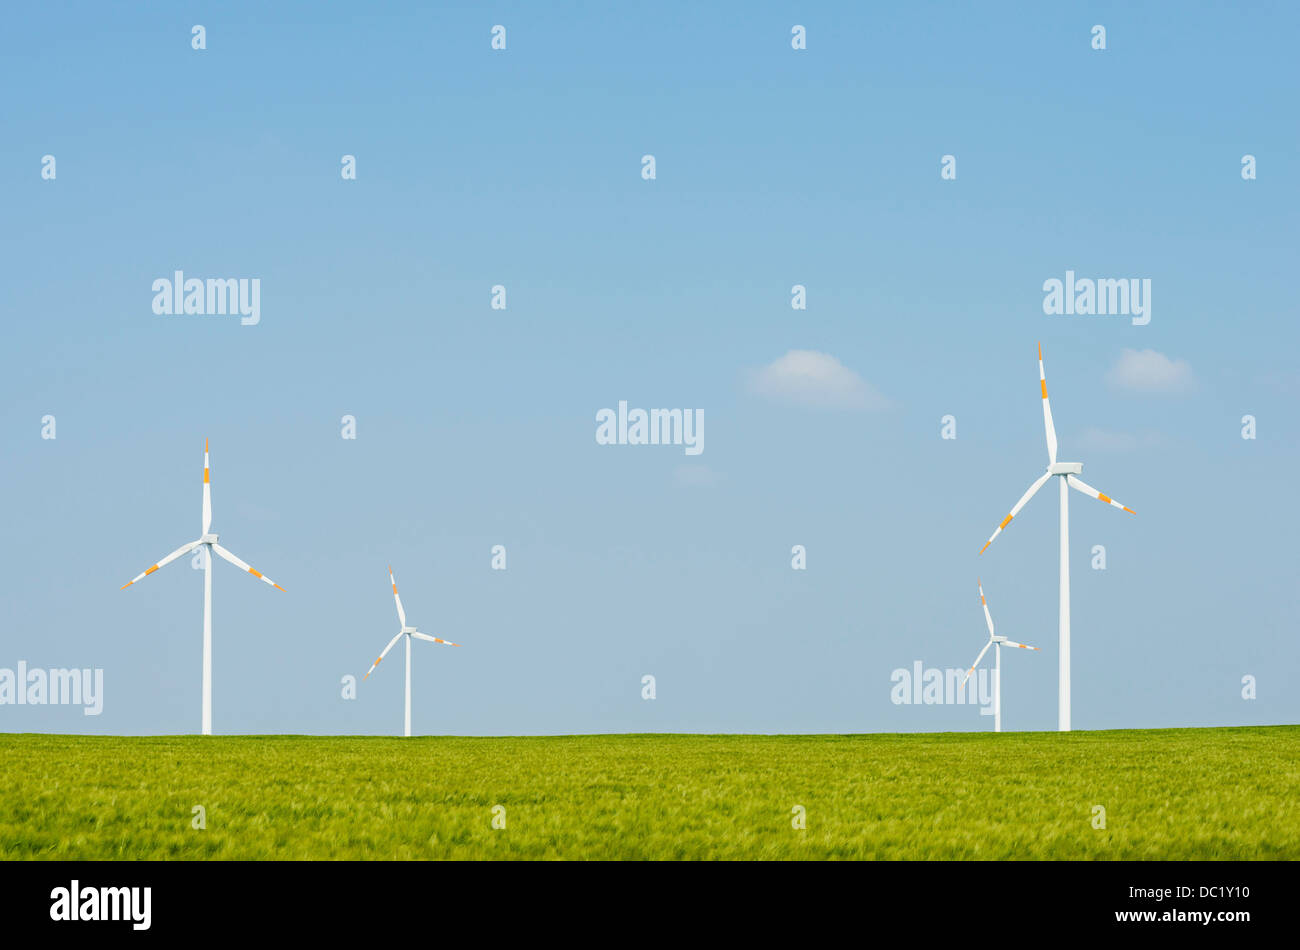 Wind turbines on horizon, Selfkant, Germany Stock Photo